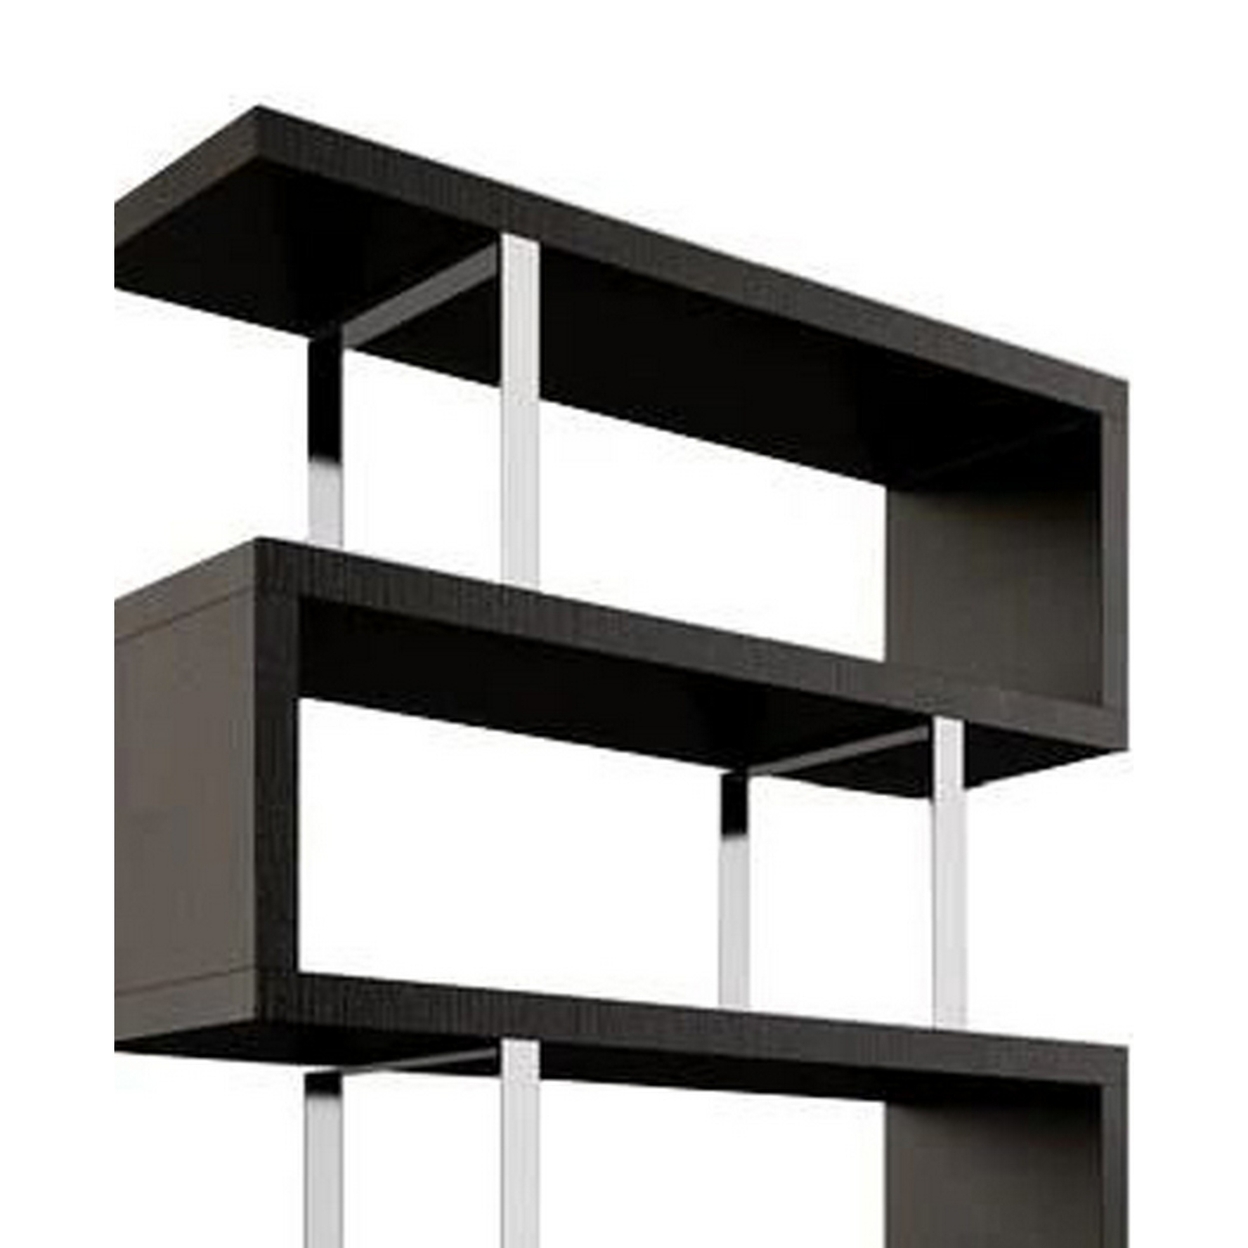 Raha 67 Inch 4 Tier Display Bookshelf, Chrome Metal, Black Lacquered MDF - Saltoro Sherpi